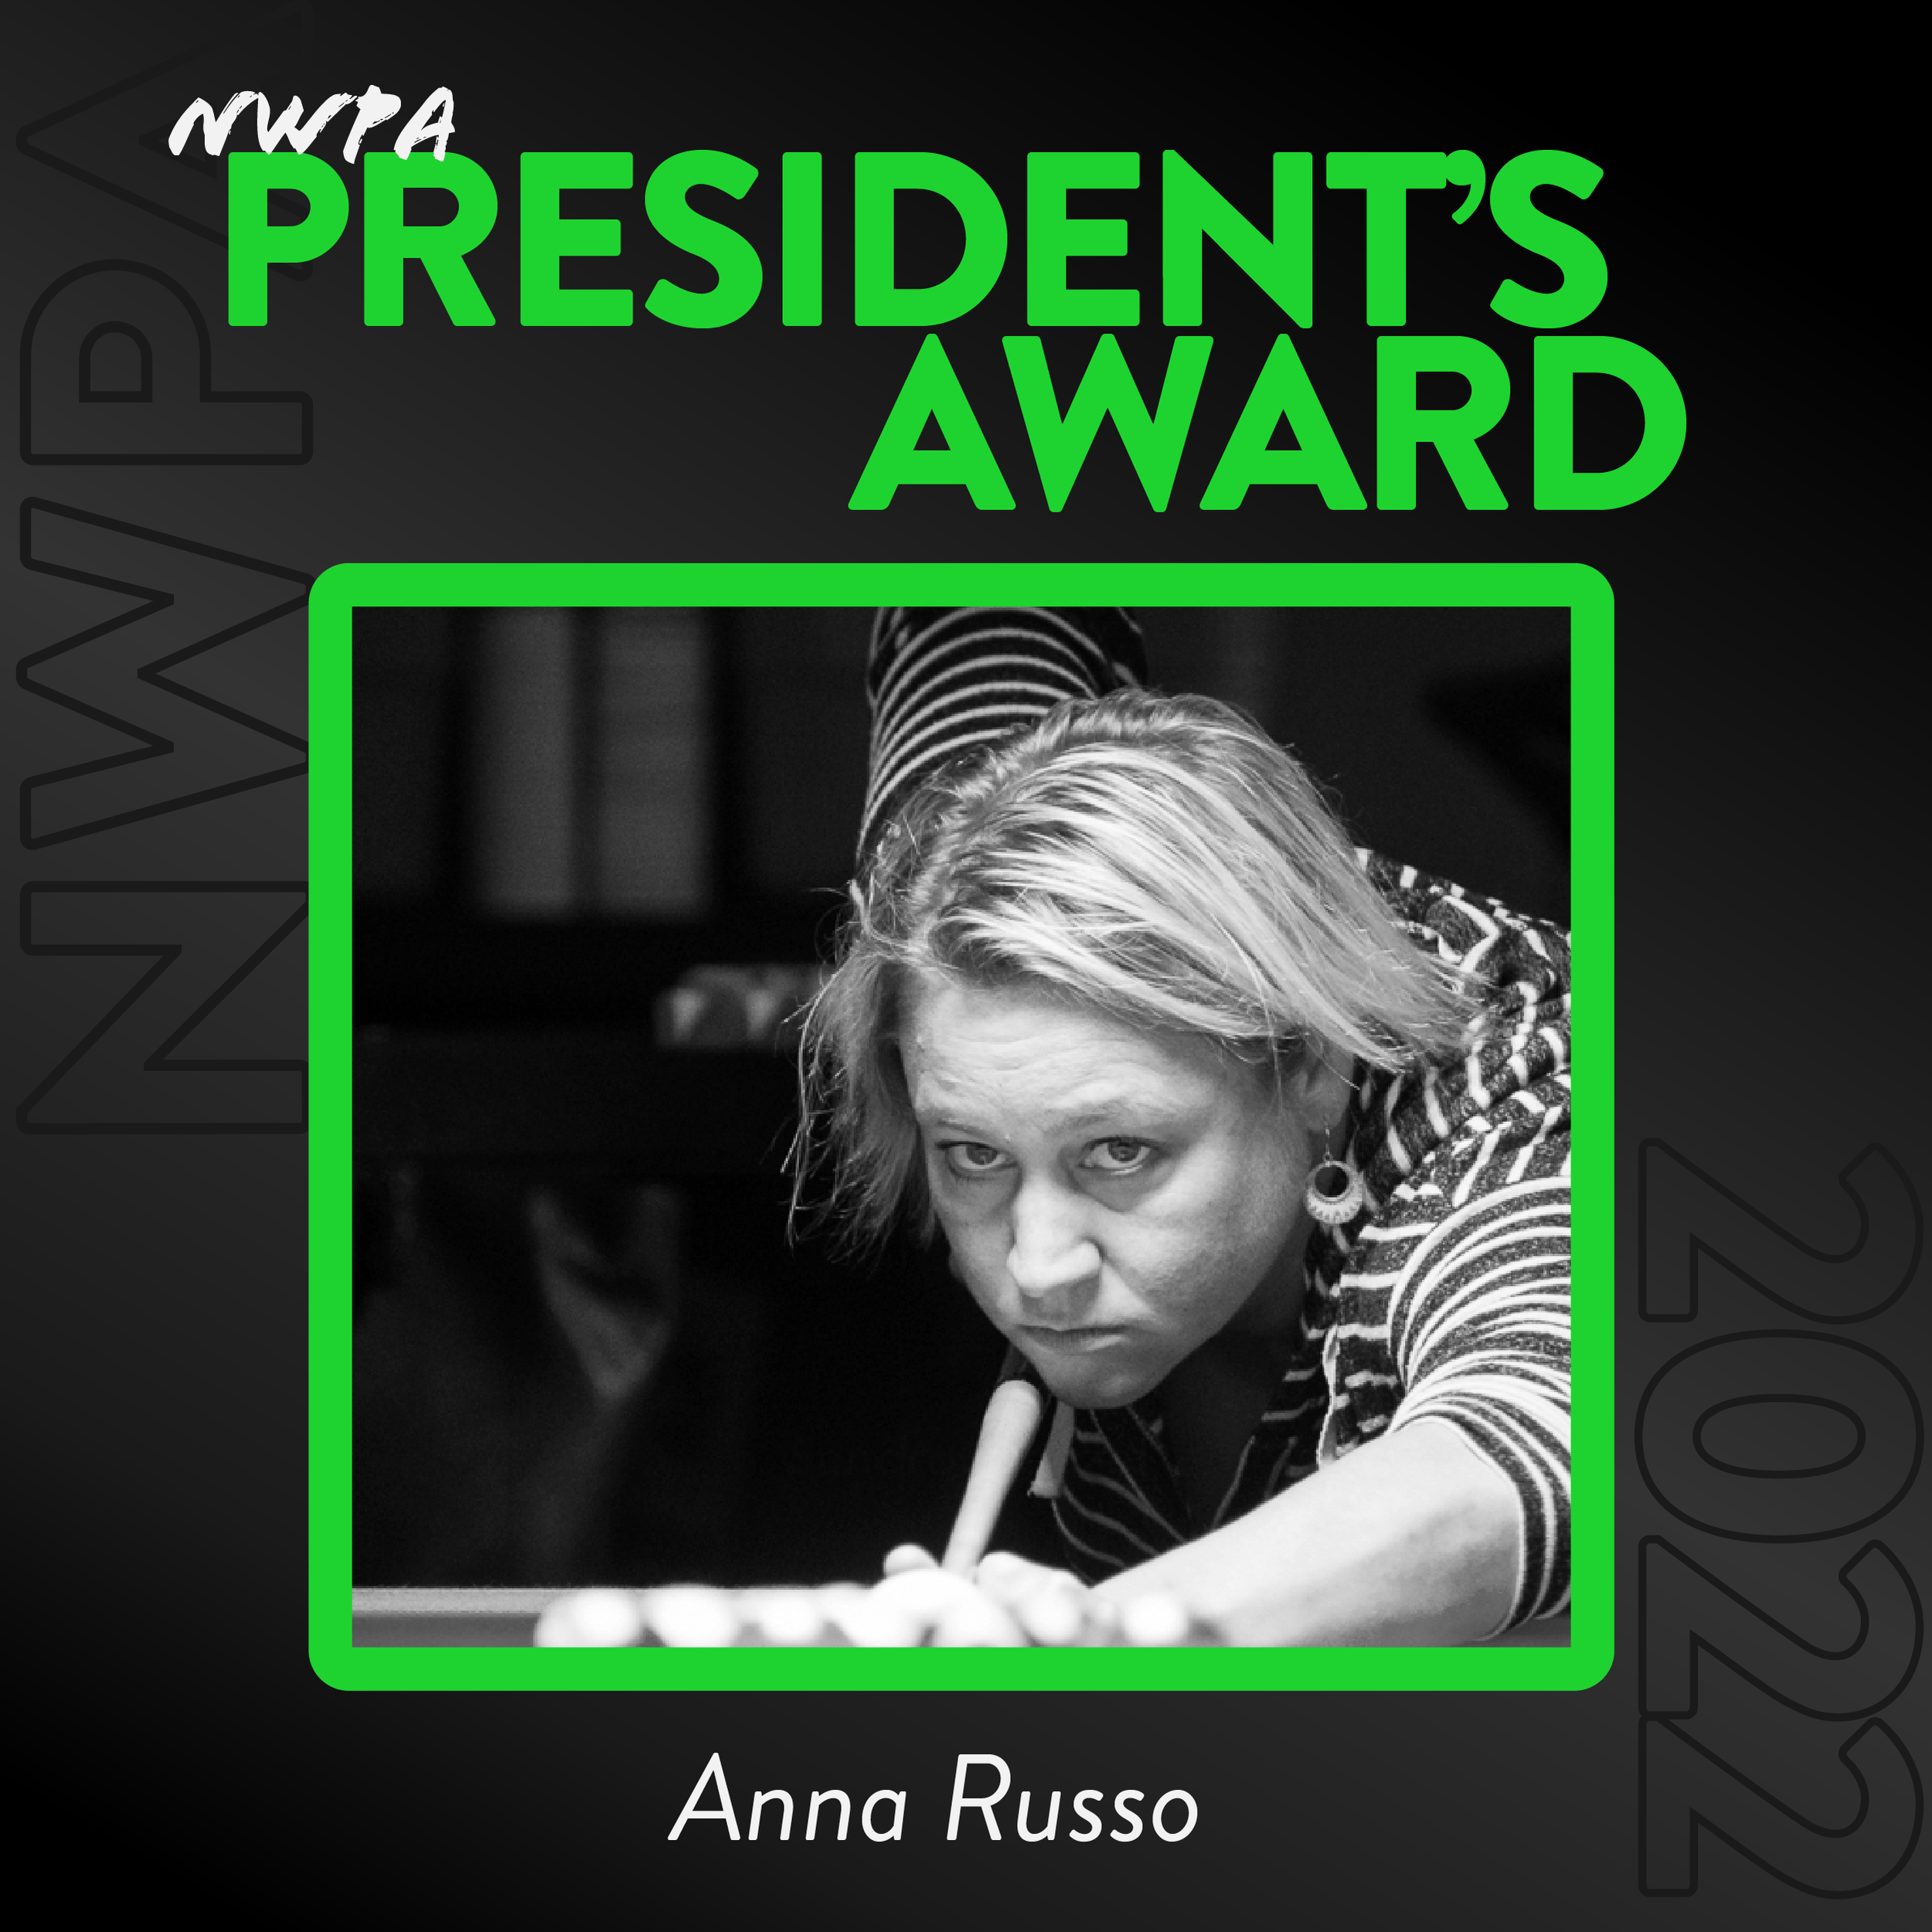 President's Award - Anna Russo